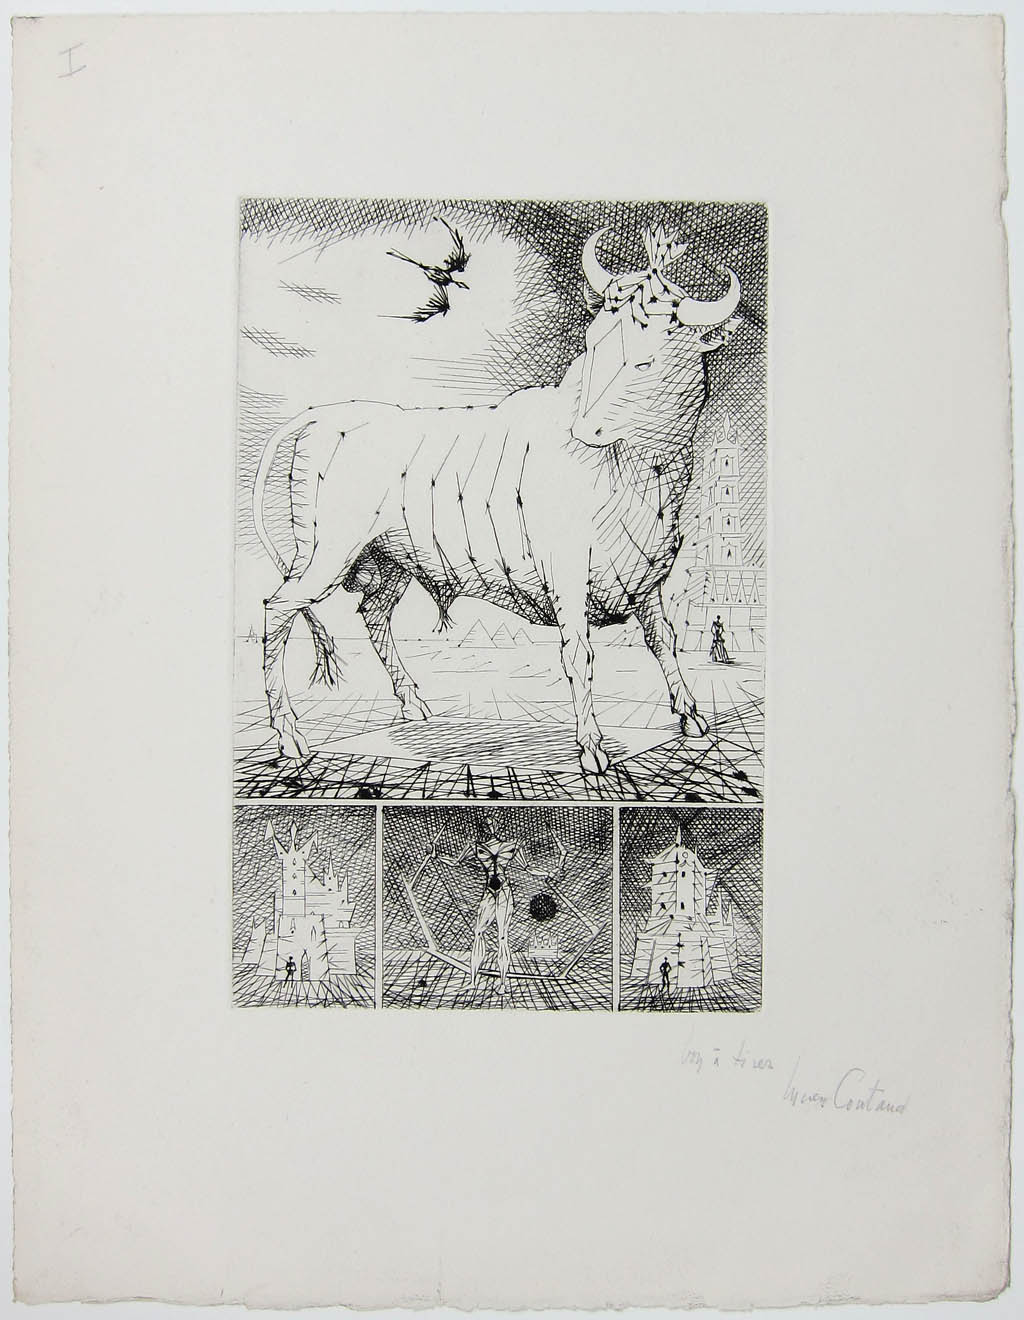 Lucien Coutaud - Le Taureau Blanc (Plate I) - 1956 etching